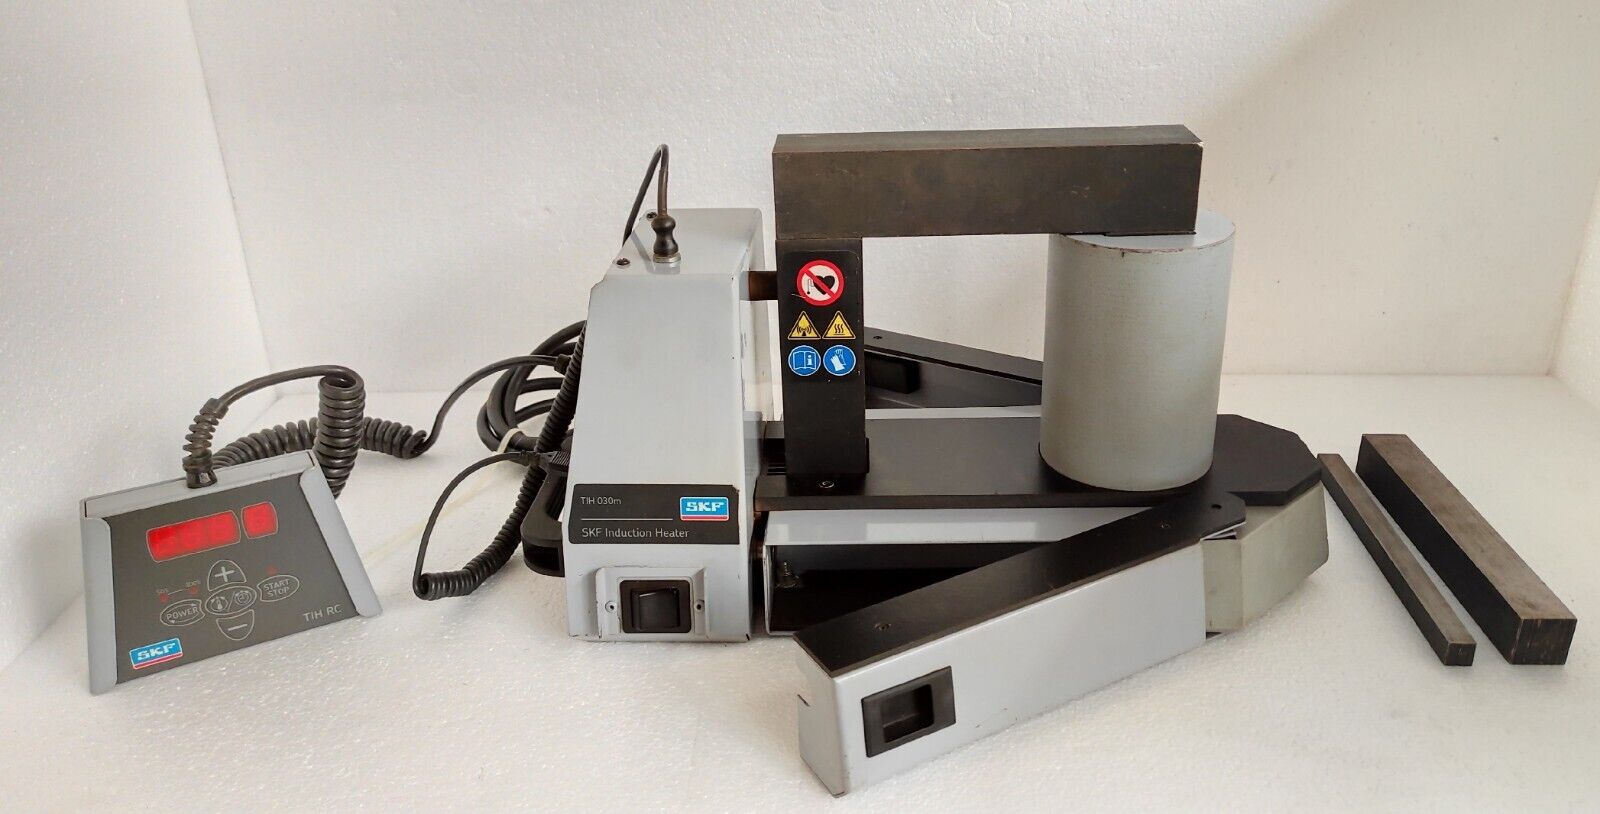 SKF tih-030m / TIH-030M Bearing Induction Heater 110V - 50/60 Hz